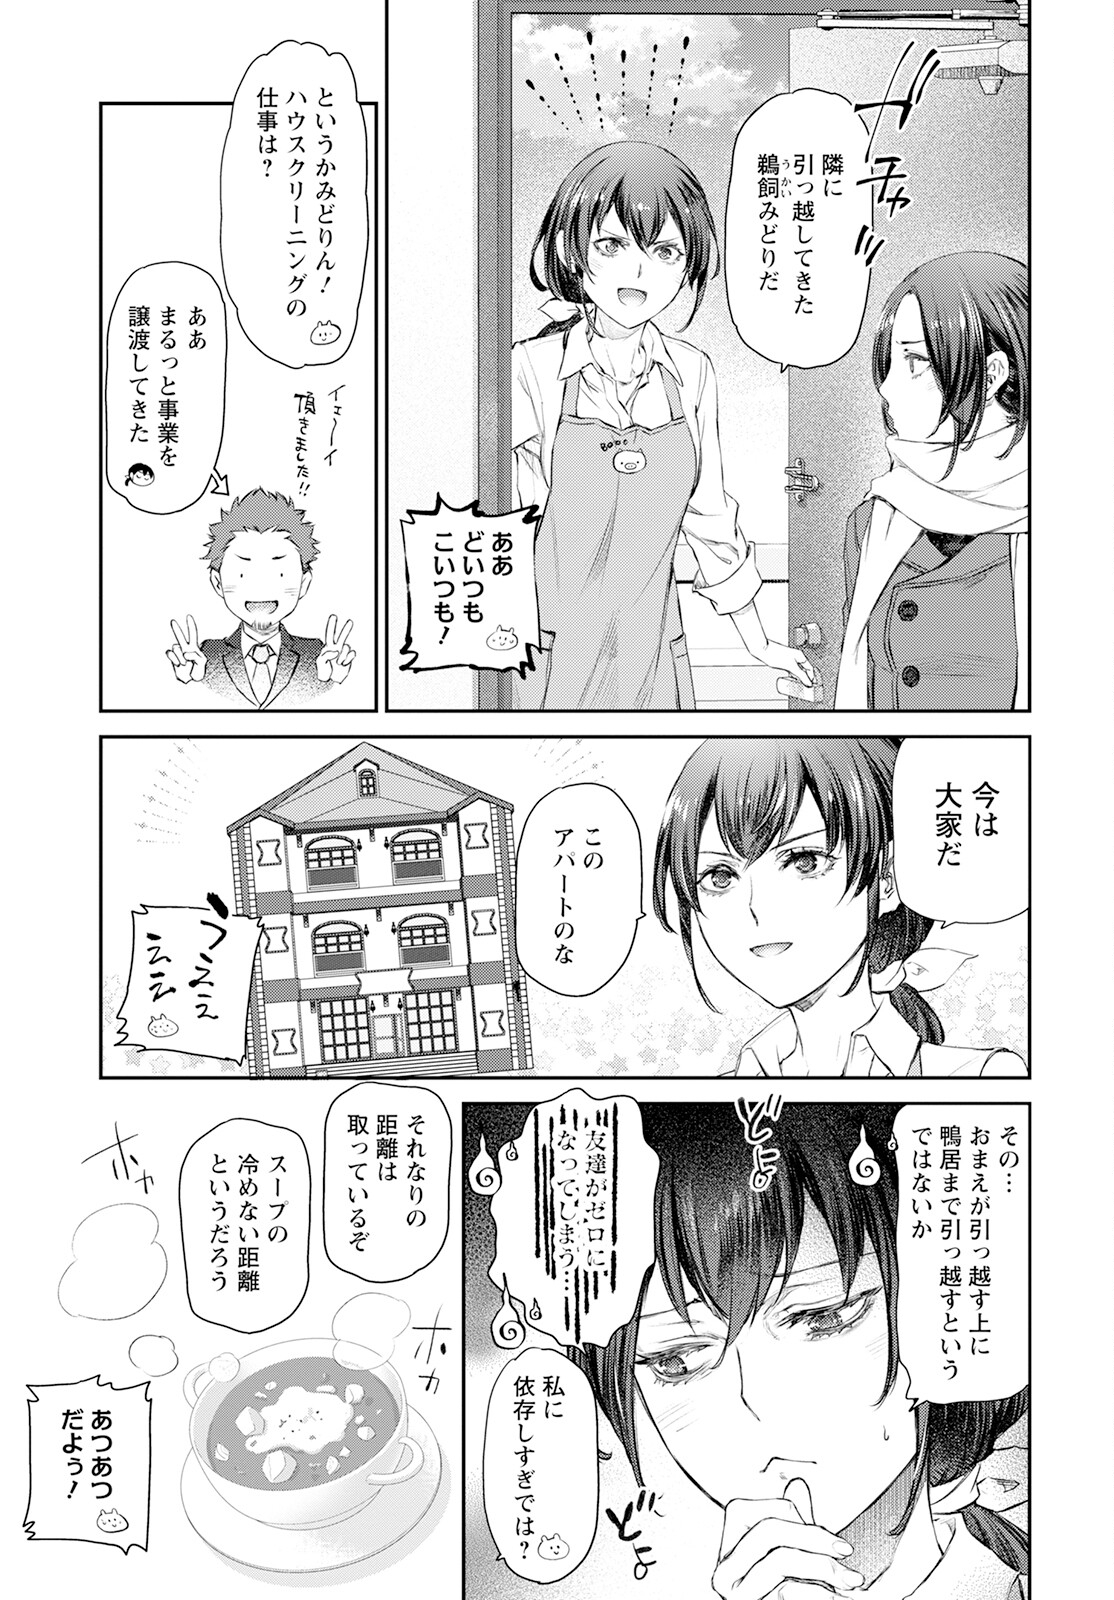 Uchi no Maid ga Uzasugiru! - Chapter 58 - Page 31